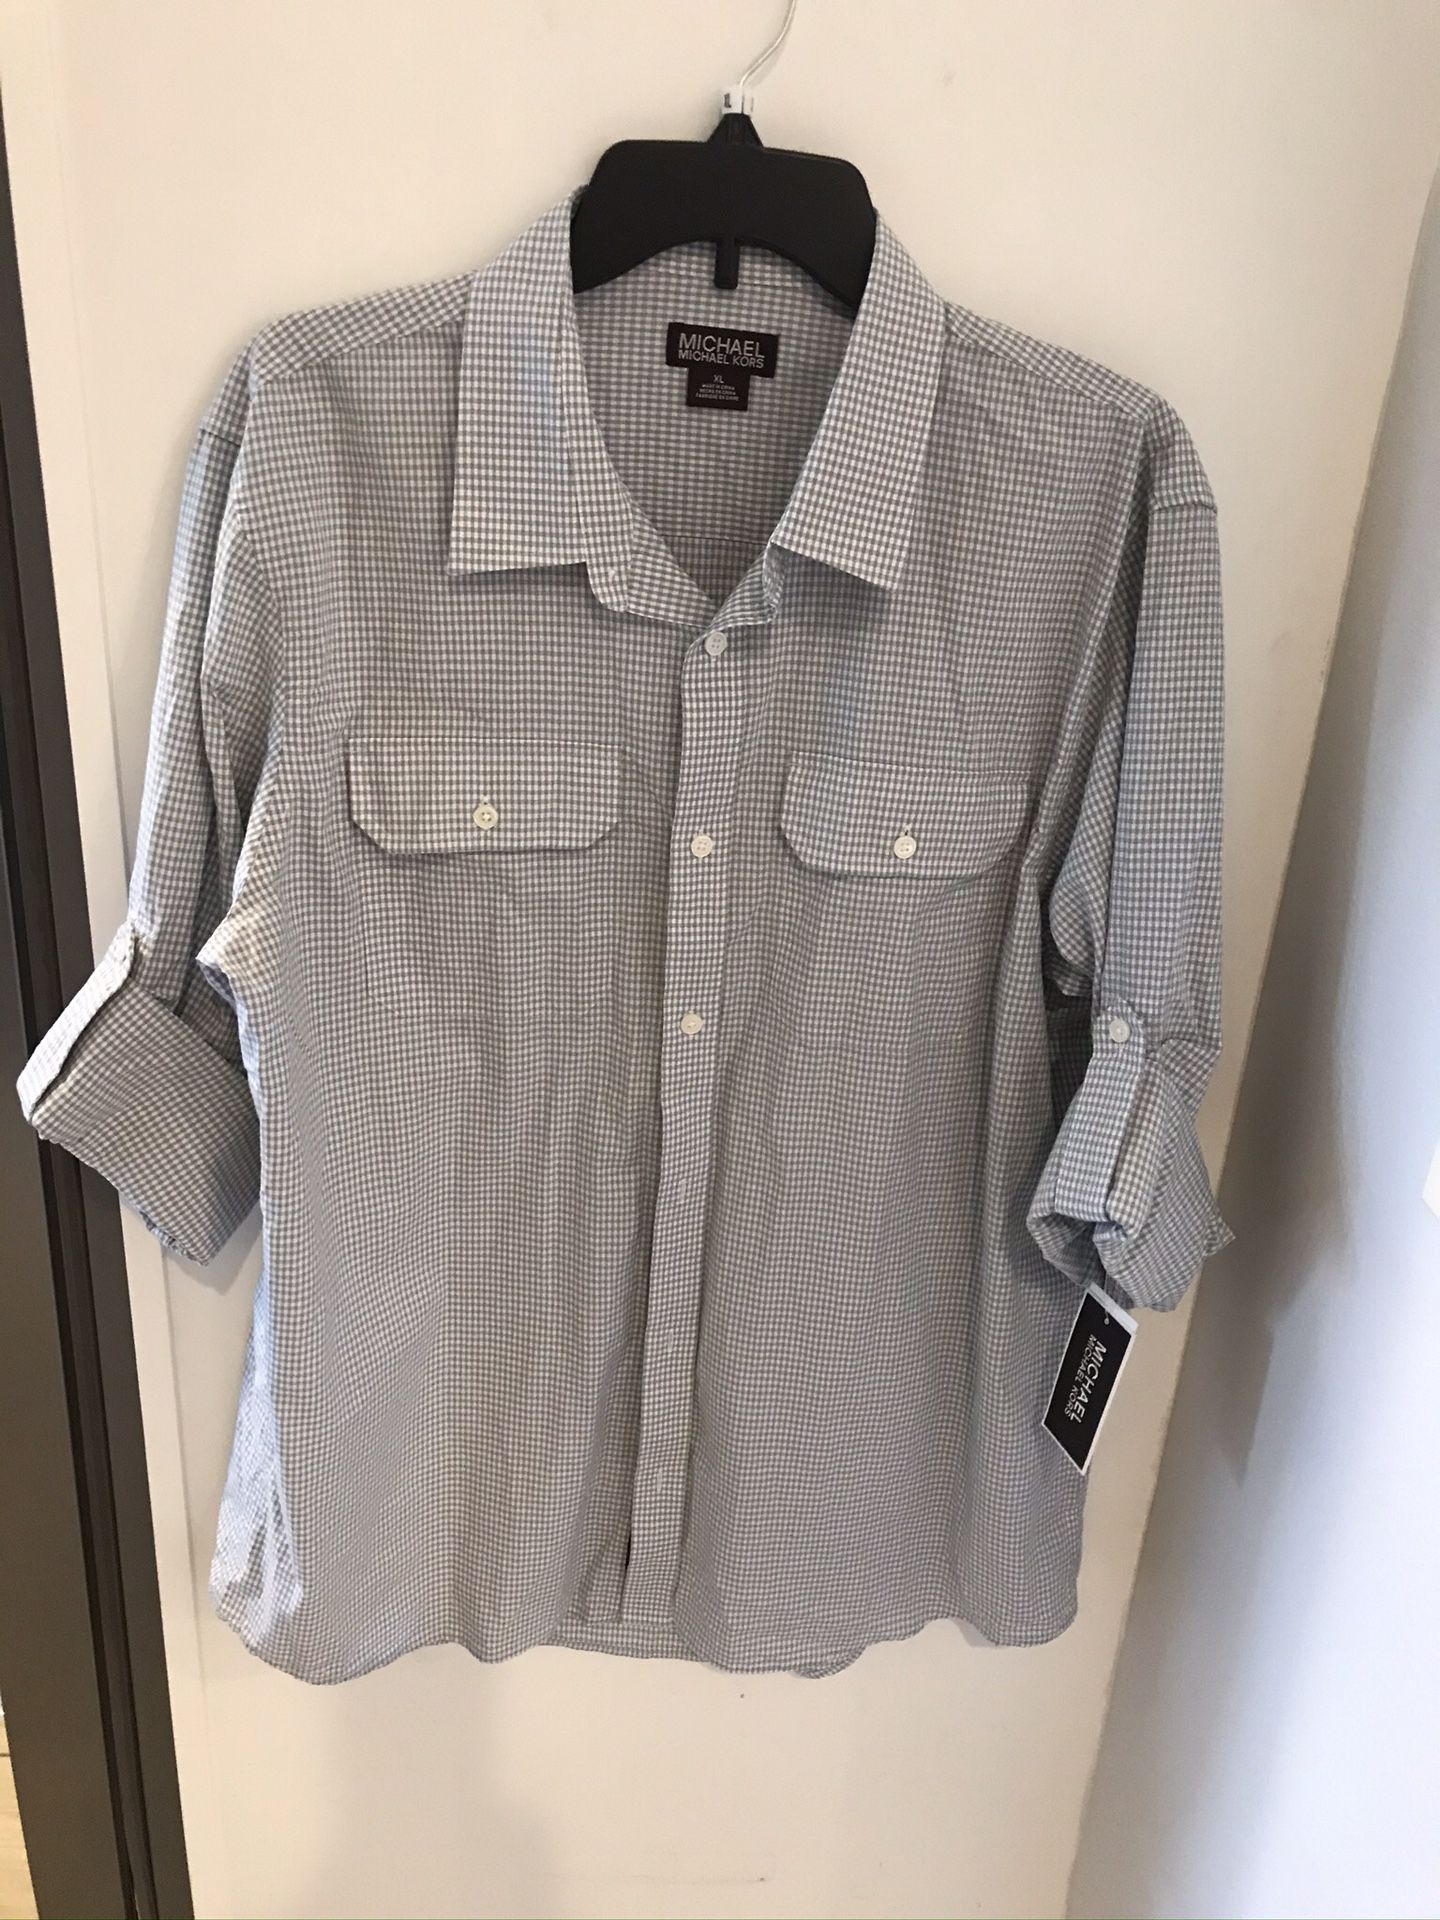 Michael Kors Men’s shirt